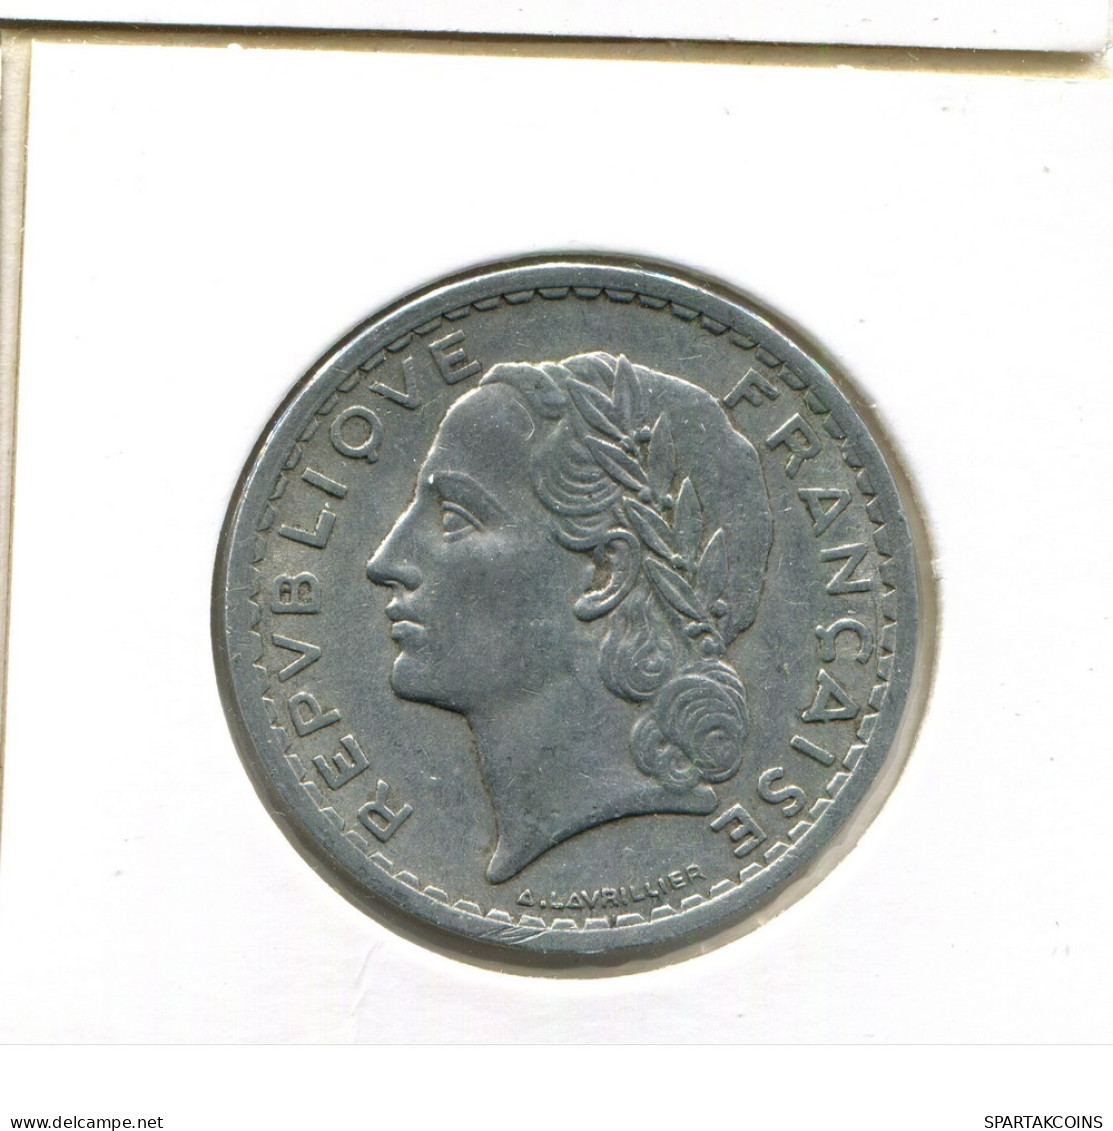 5 FRANCS 1945 FRANCE French Coin #BA806.U.A - 5 Francs